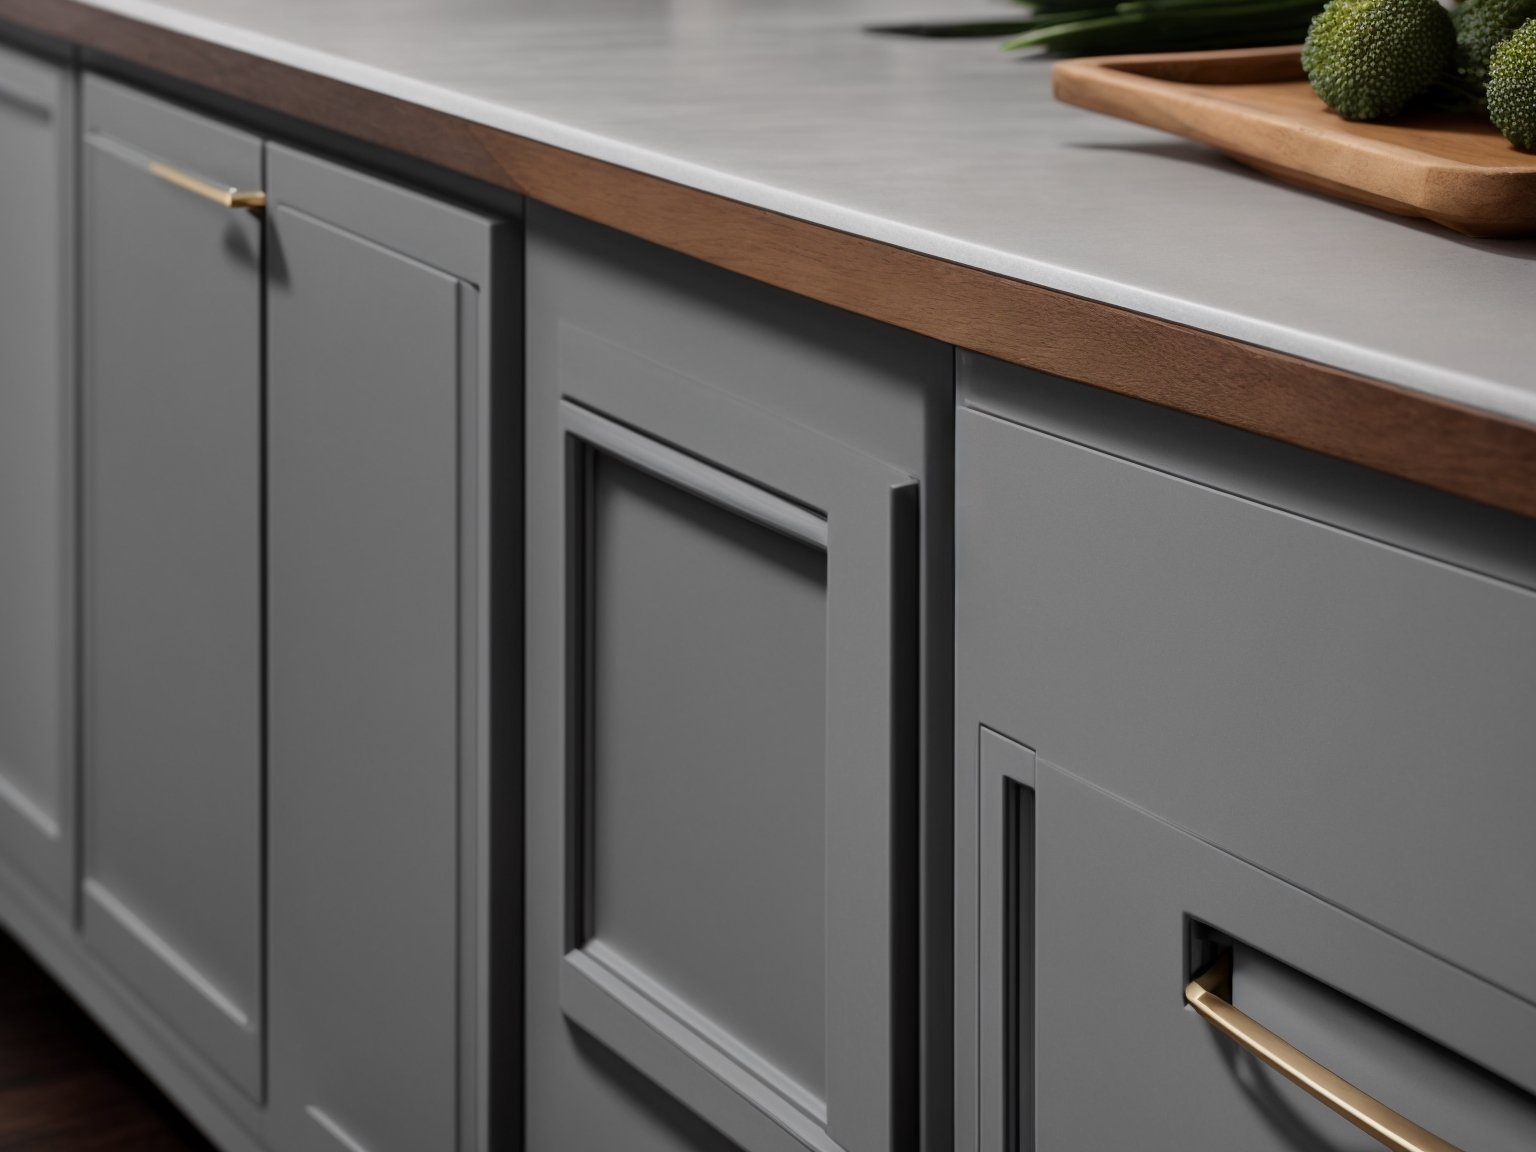 A stylish kitchen with grey cabinets, white subway tile backsplash, and quartz countertops